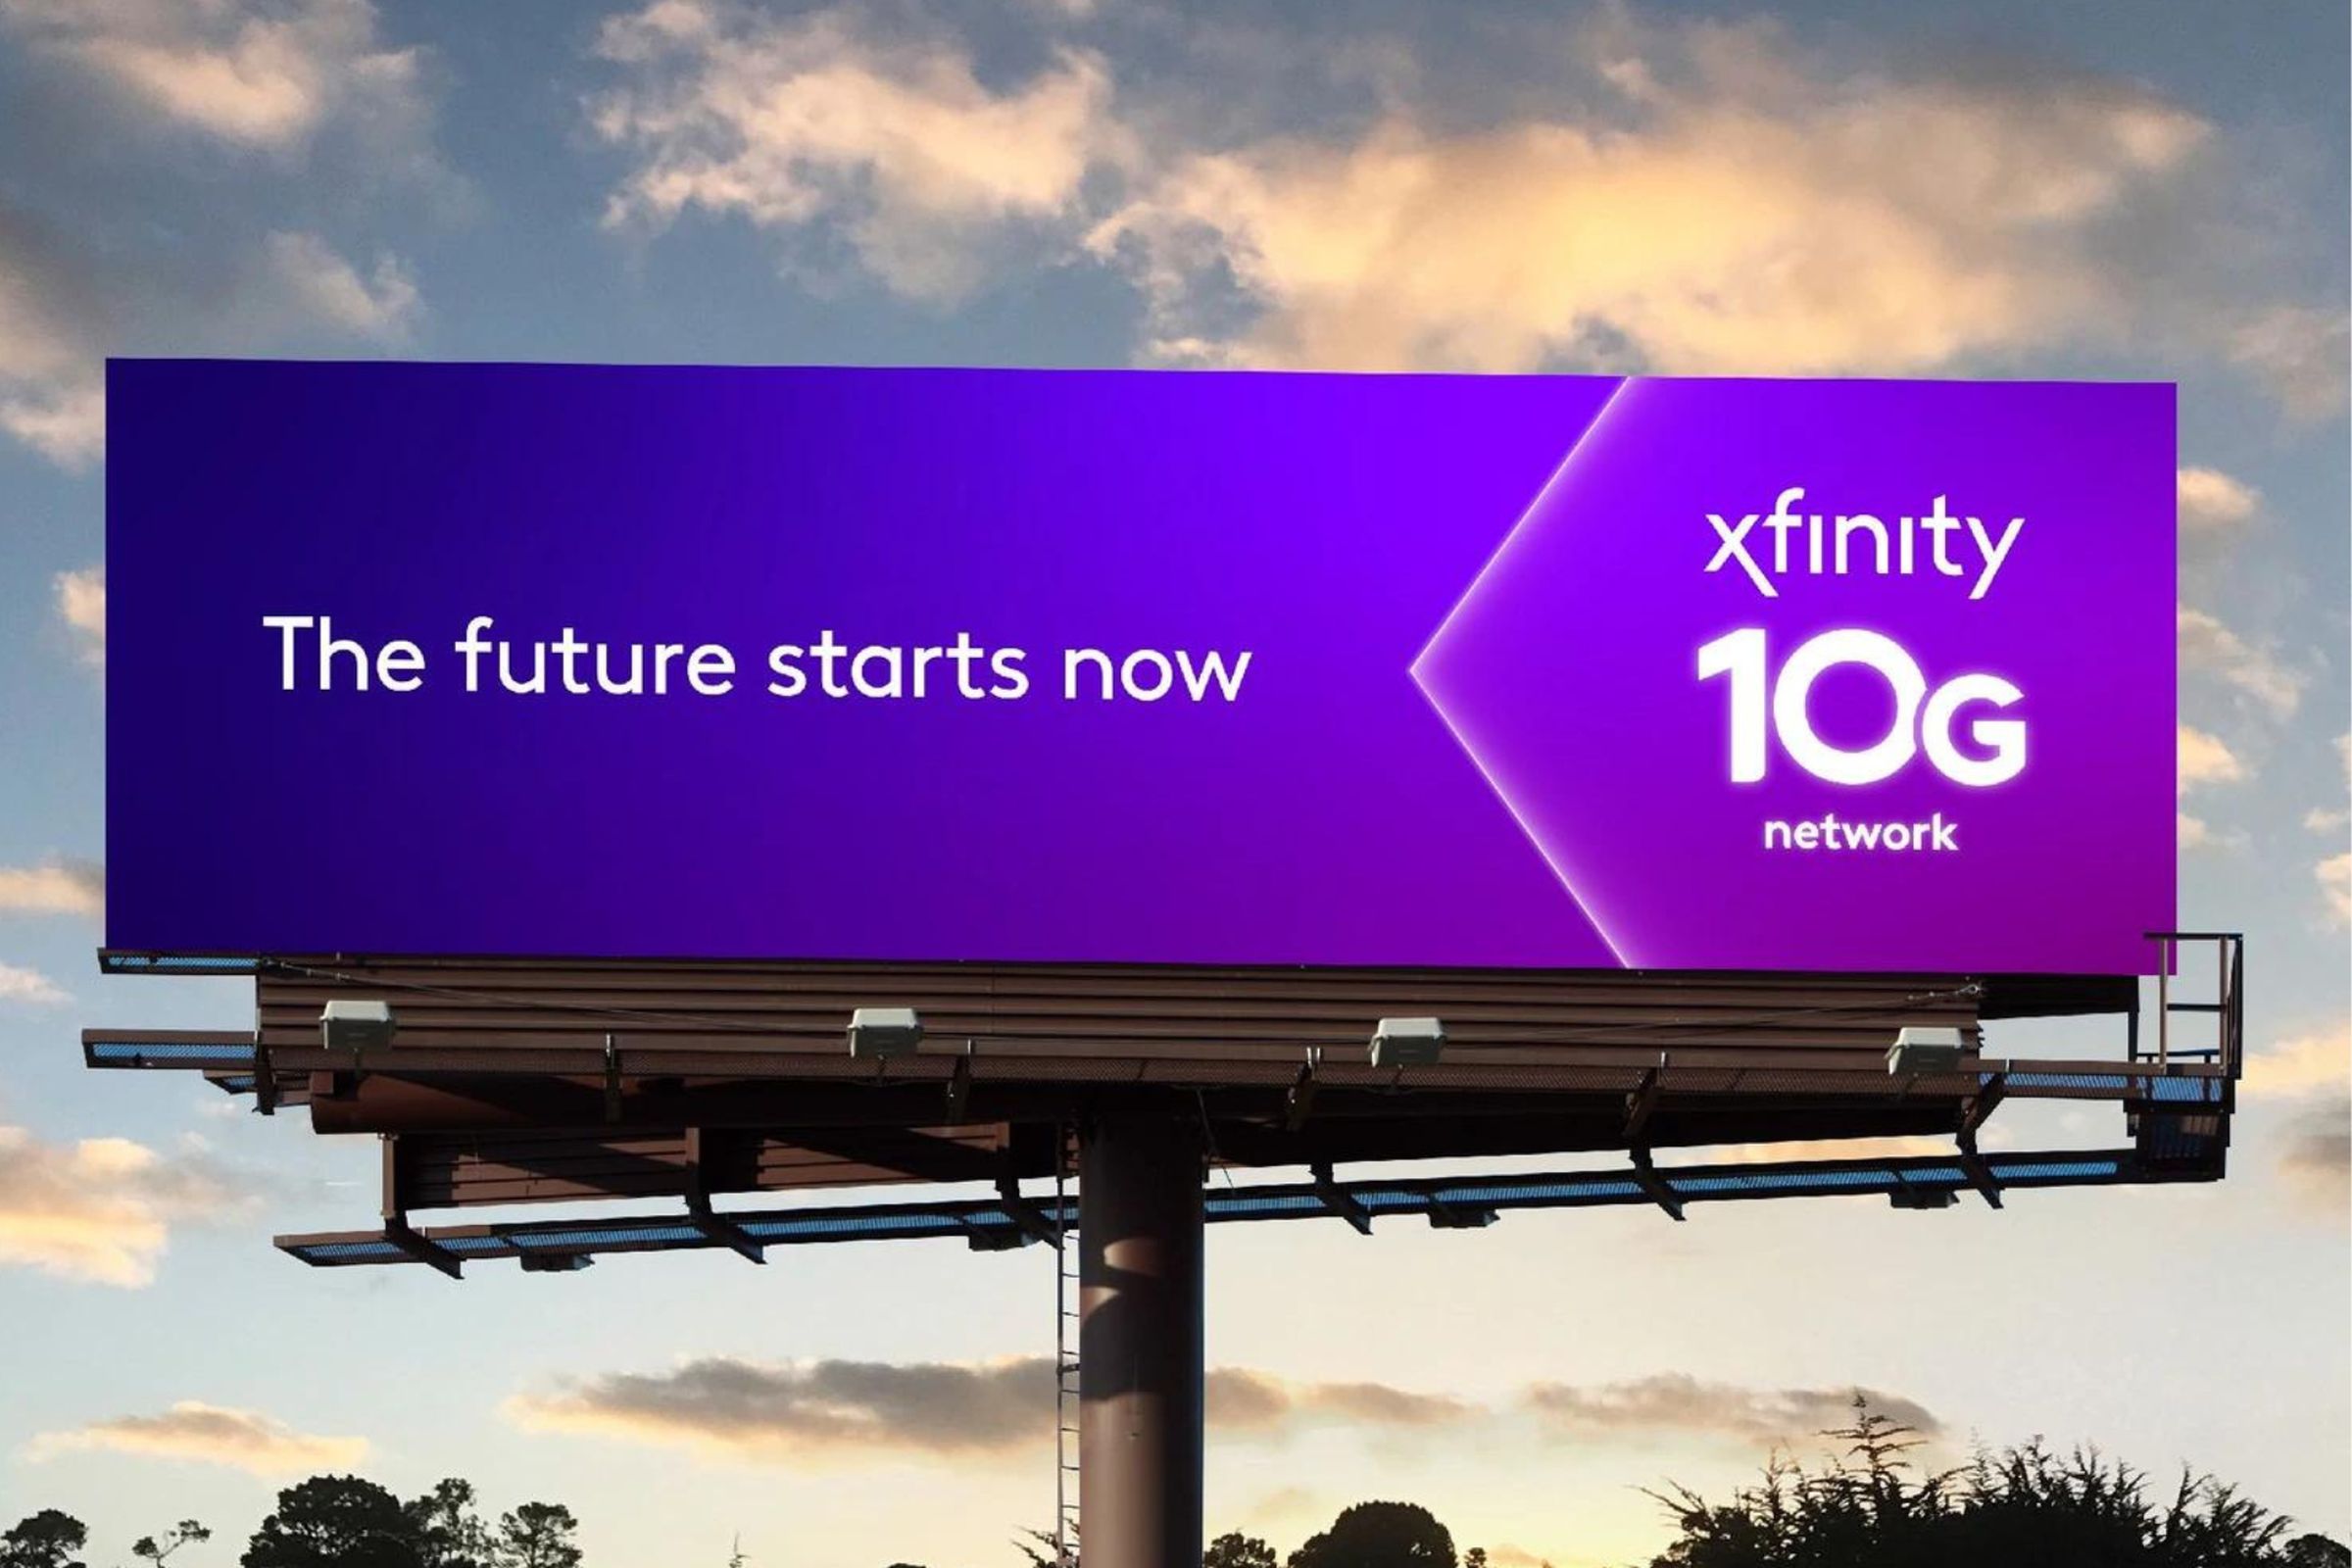 A billboard advertising Comcast’s Xfinity 10G network.